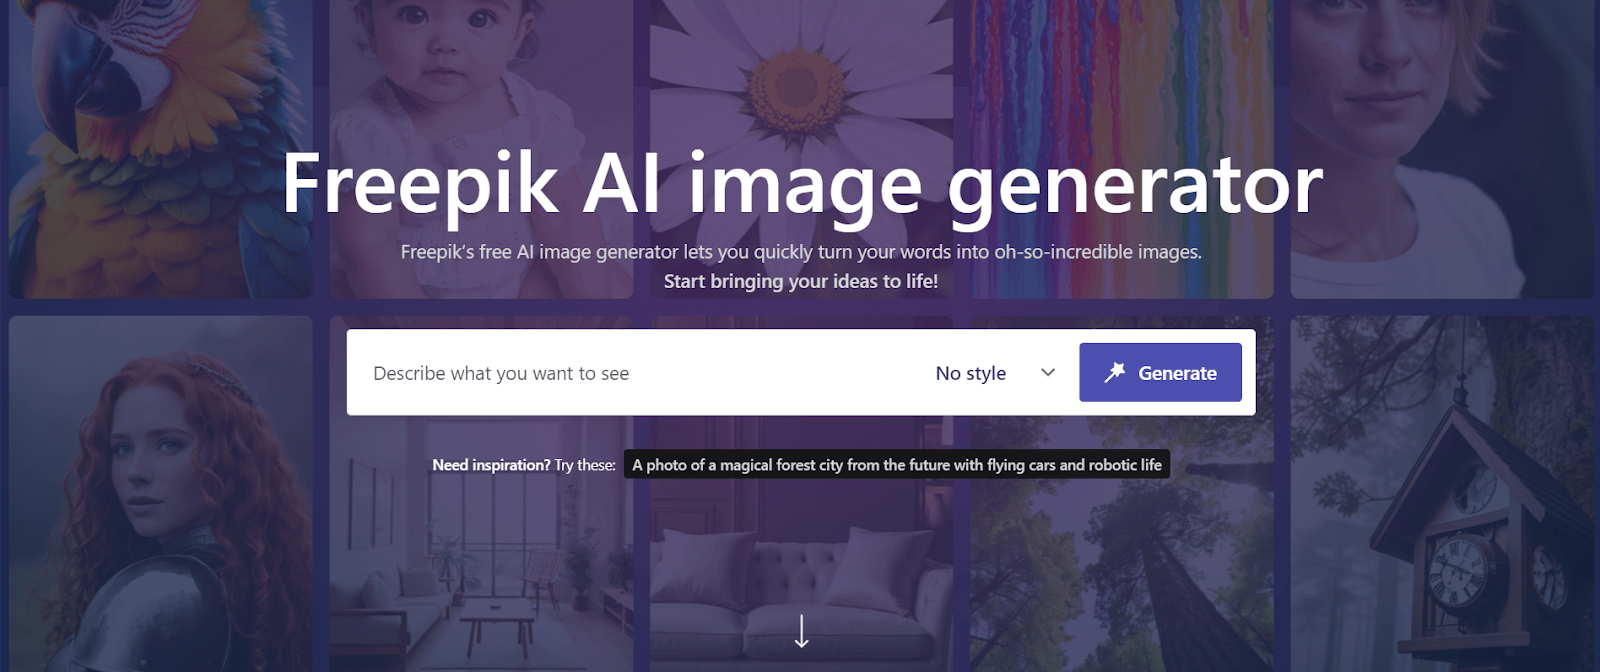 AI Image Generator by Freepik